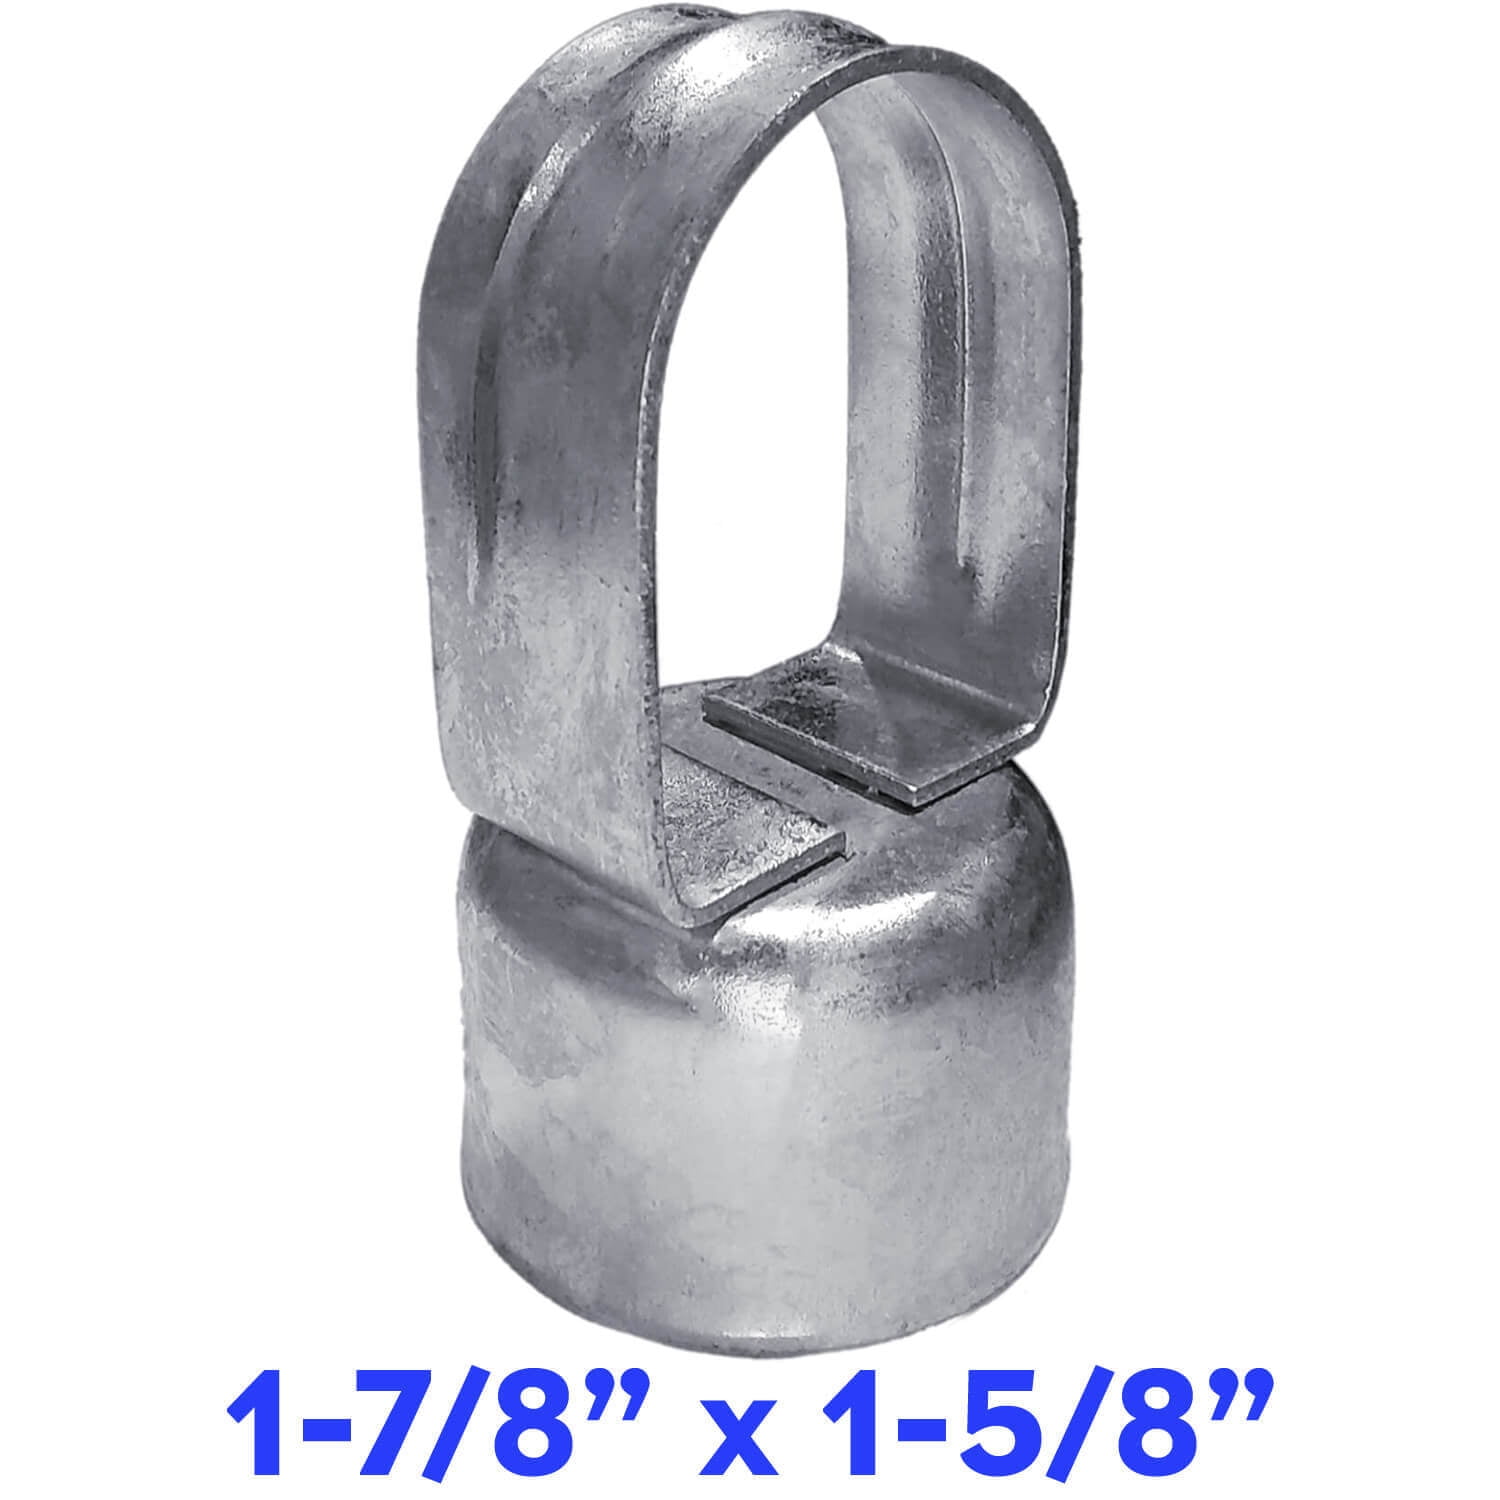 Heavy Duty Steel Fence Loop Cap 2-3/8" x 1-5/8" 